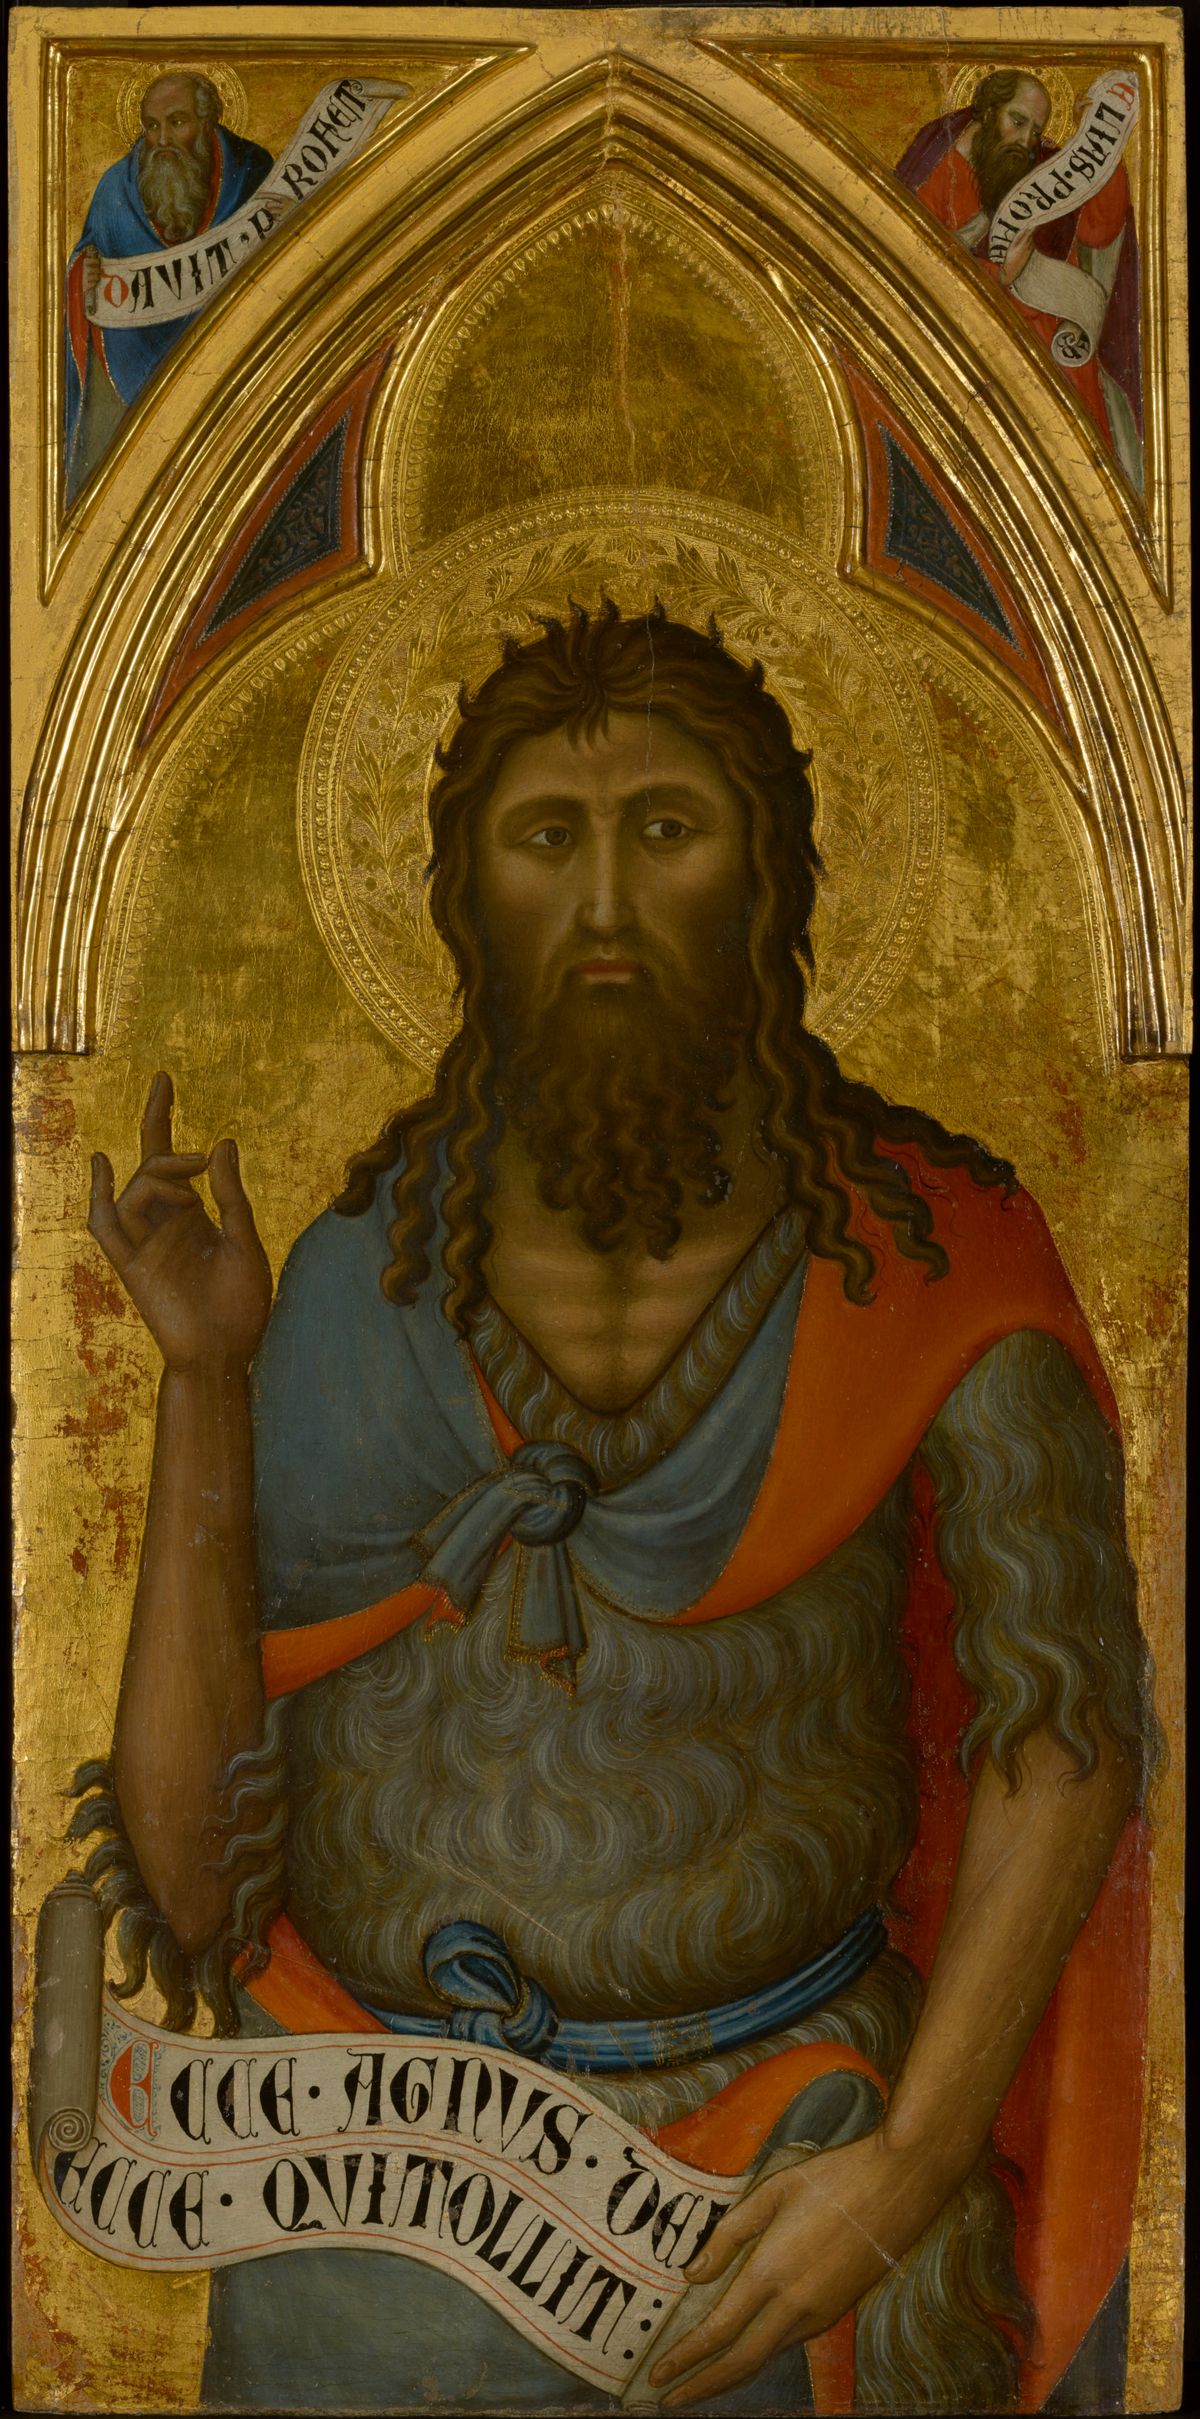 Saint John the Baptist by Luca di Tommè (late 14th Century) - Public Domain Catholic Painting